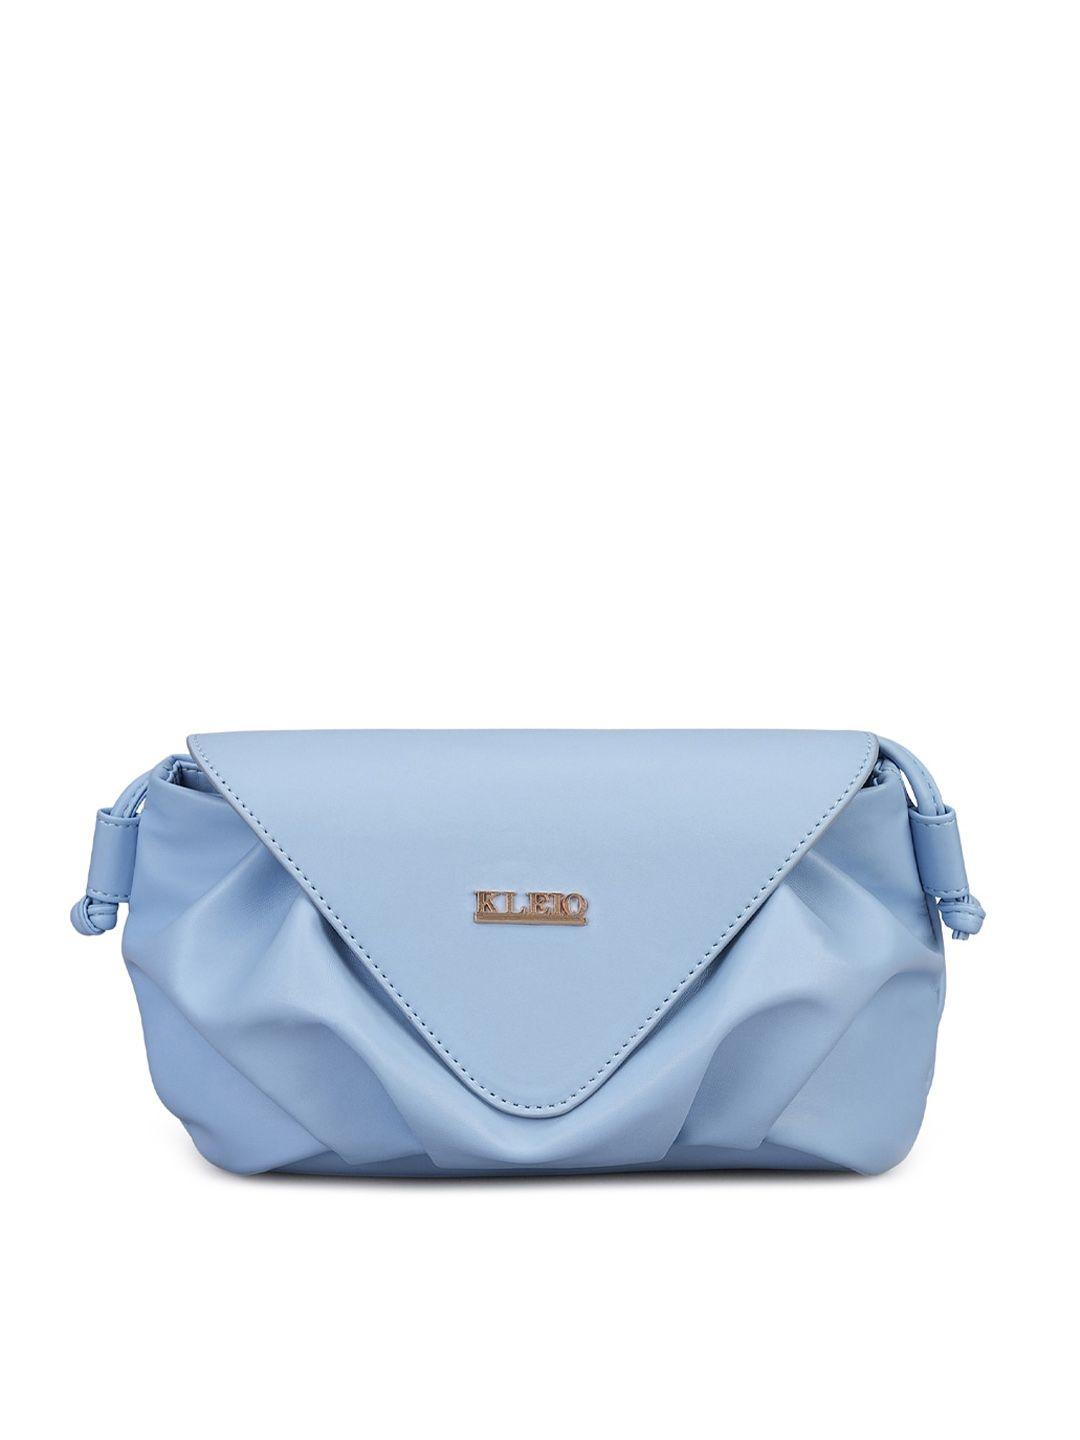 kleio pu structured sling bag